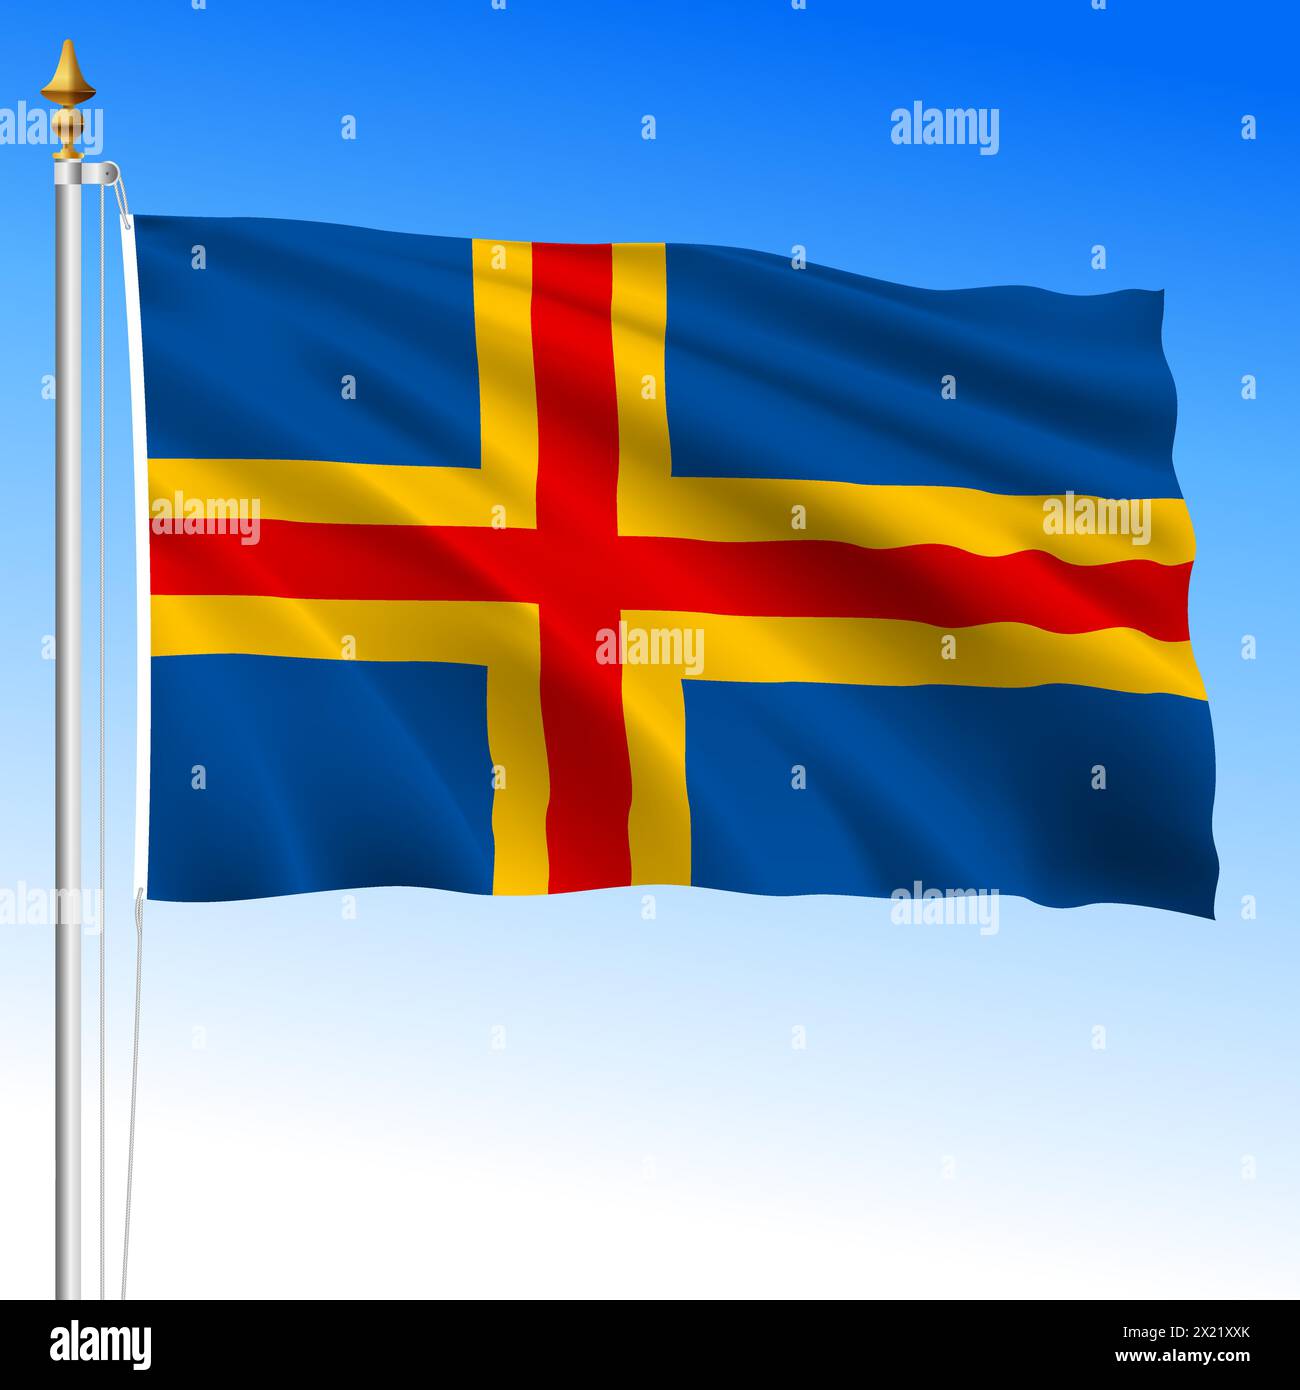 Aland official national waving flag, Finnish islands, vector illustration Stock Vector